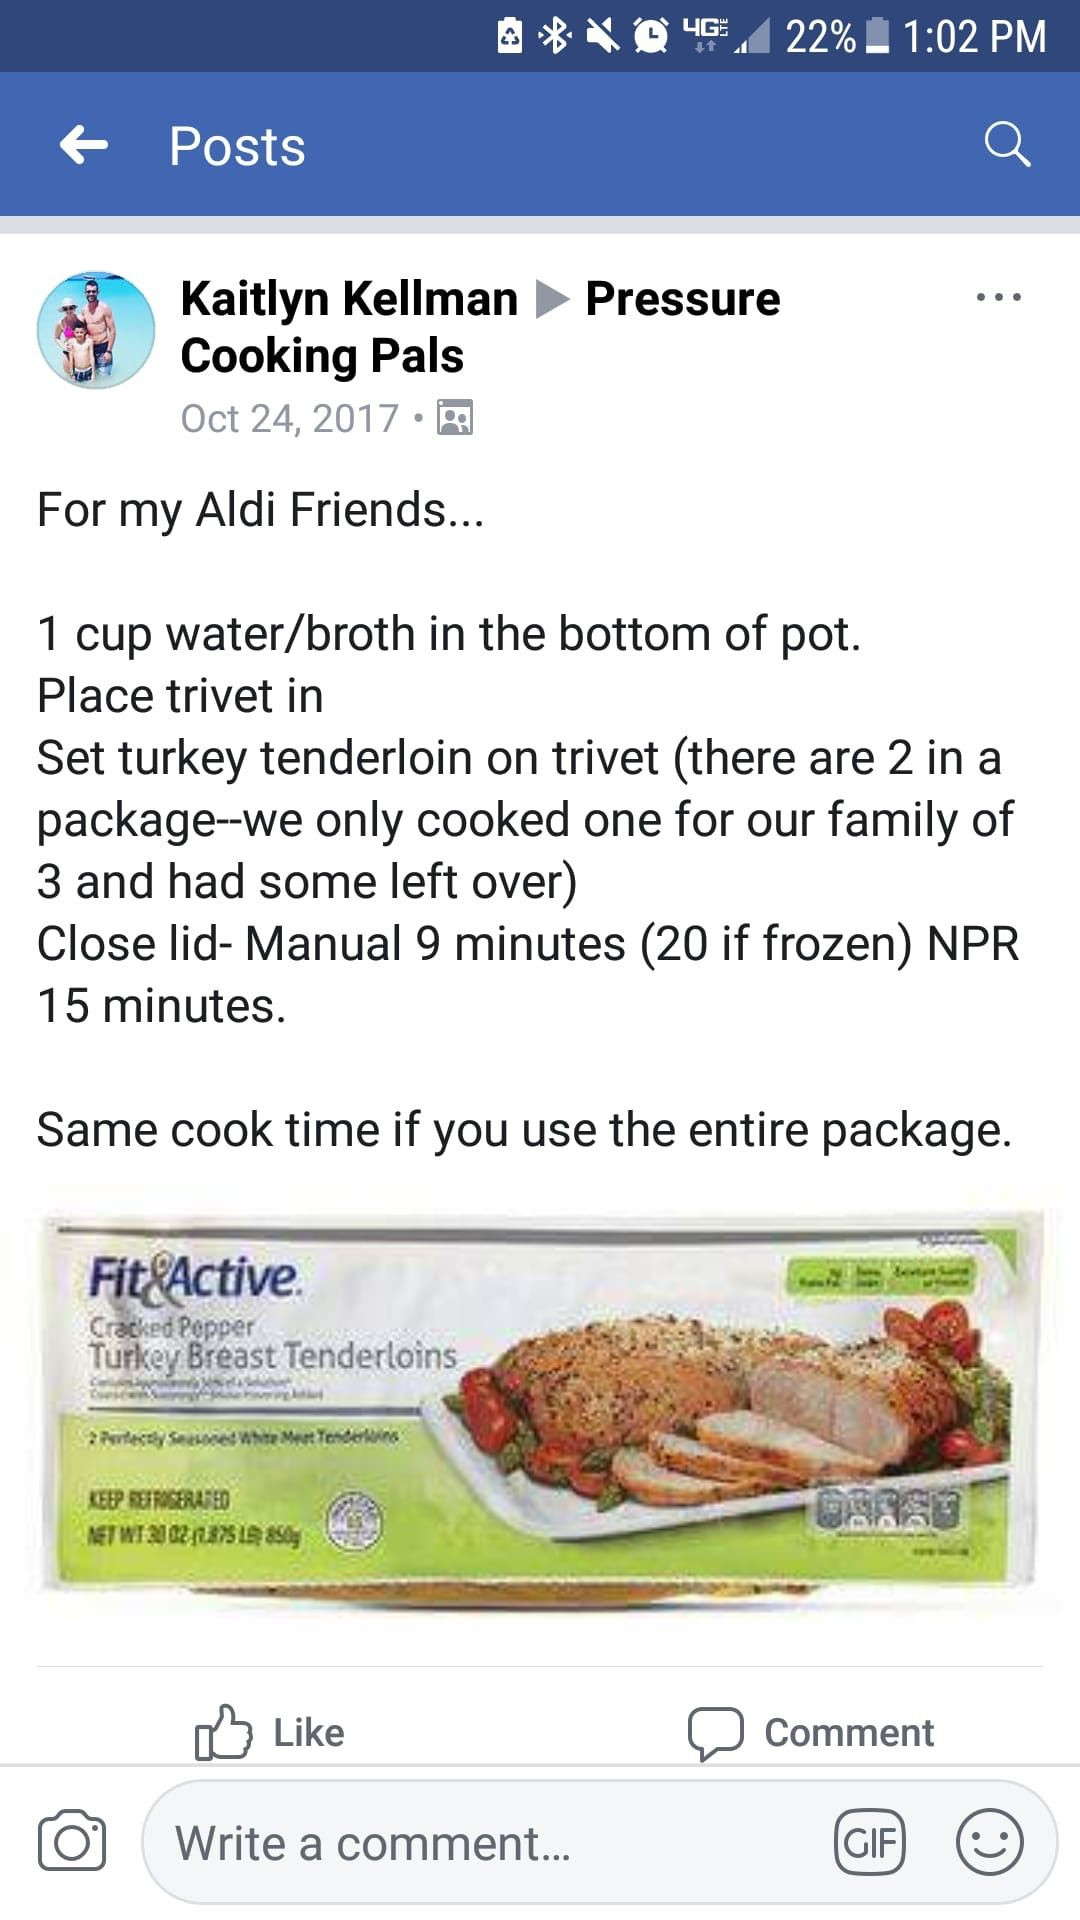 Instant Pot Turkey Tenderloin Recipes
 Turkey tenderloin in the Instant Pot